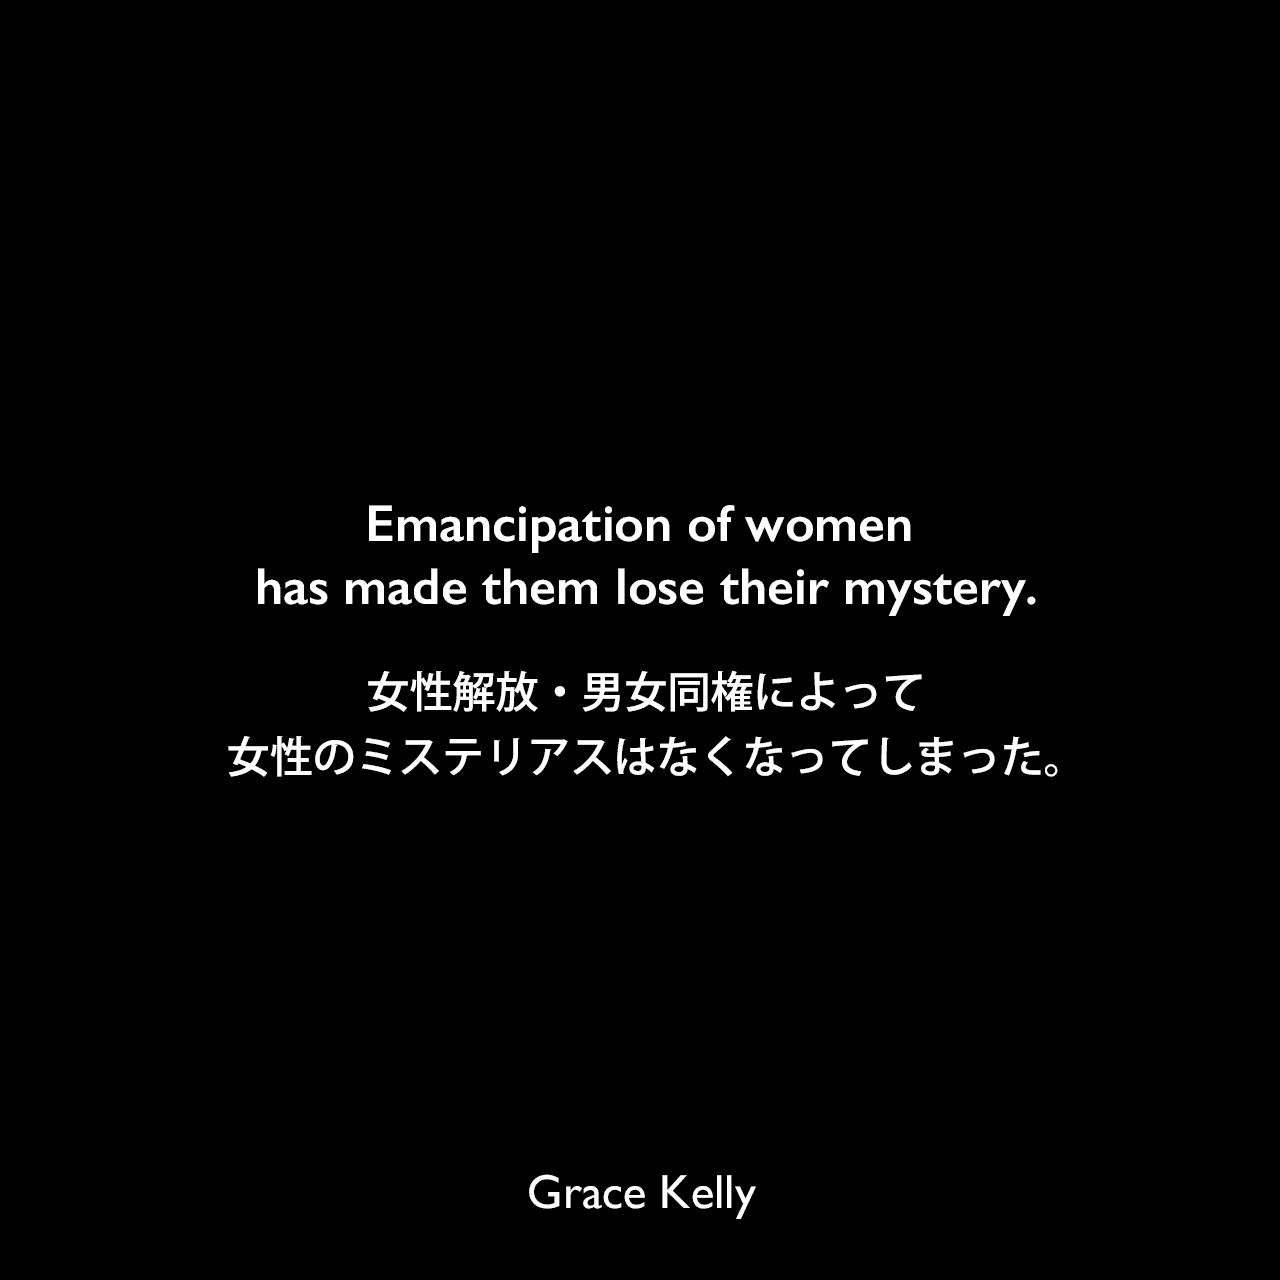 Emancipation of women has made them lose their mystery.女性解放・男女同権によって女性のミステリアスはなくなってしまった。Grace Kelly